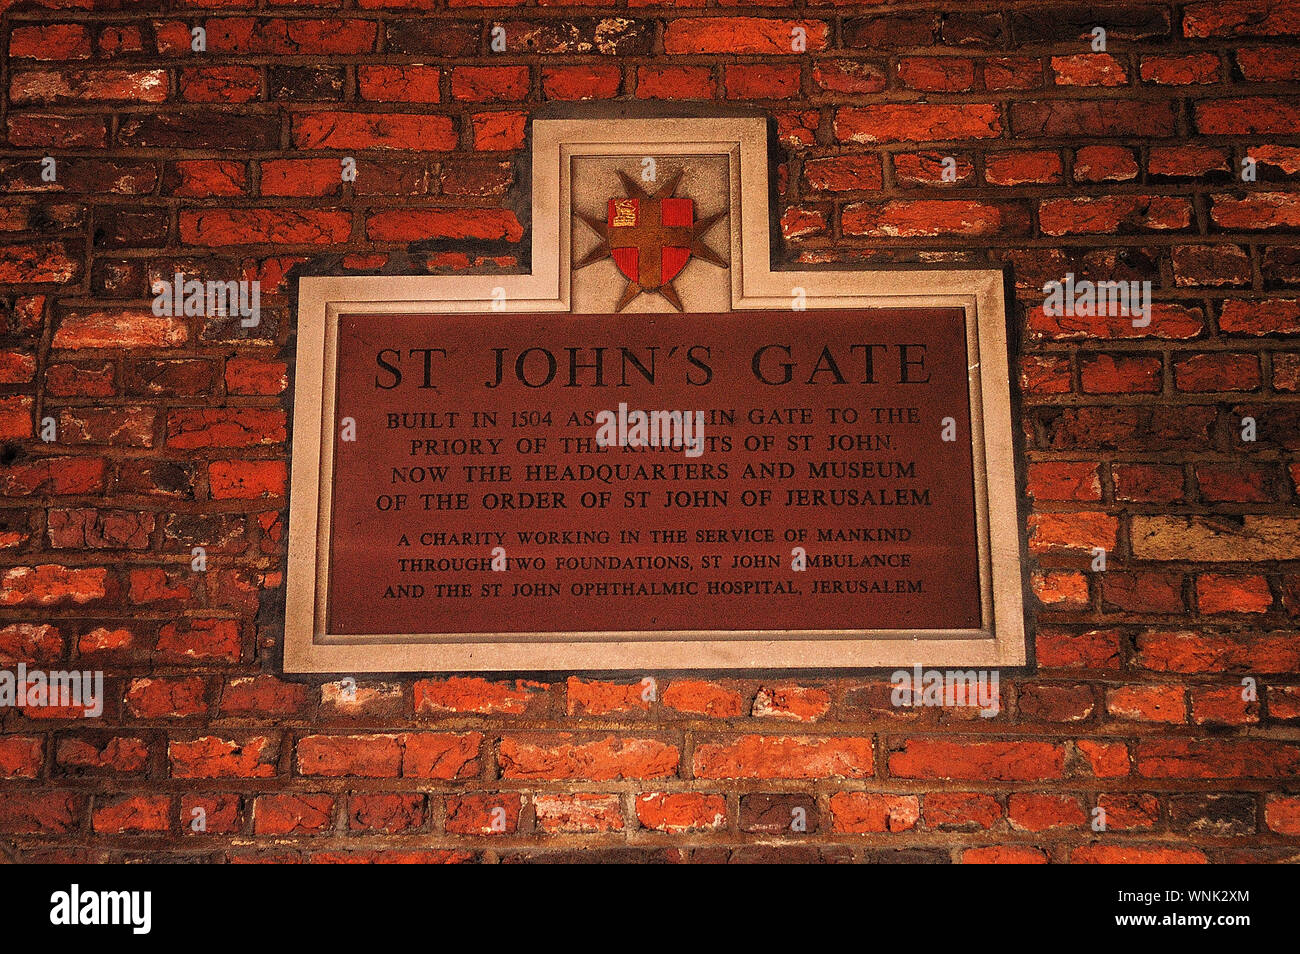 St John's Gate, in Clerkenwell, Middlesex, London, GBLondon, london, uk, geography, travel, Photo Kazimierz Jurewicz Stock Photo